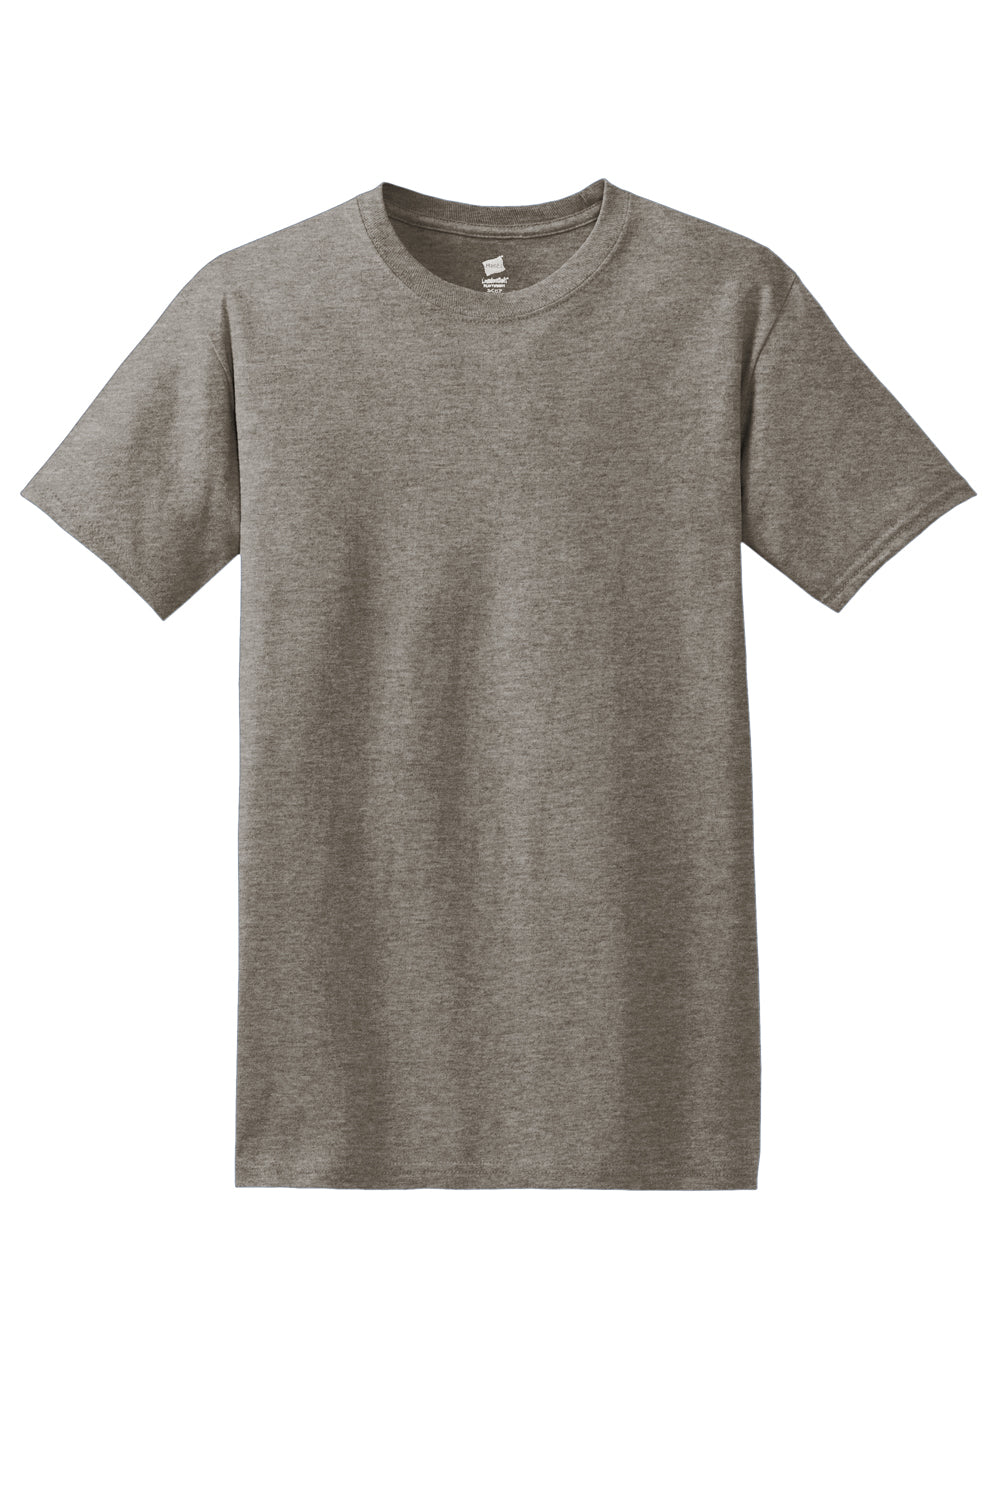 Hanes Mens ComfortSoft Short Sleeve Crewneck T-Shirt Oxford Gray Flat Front